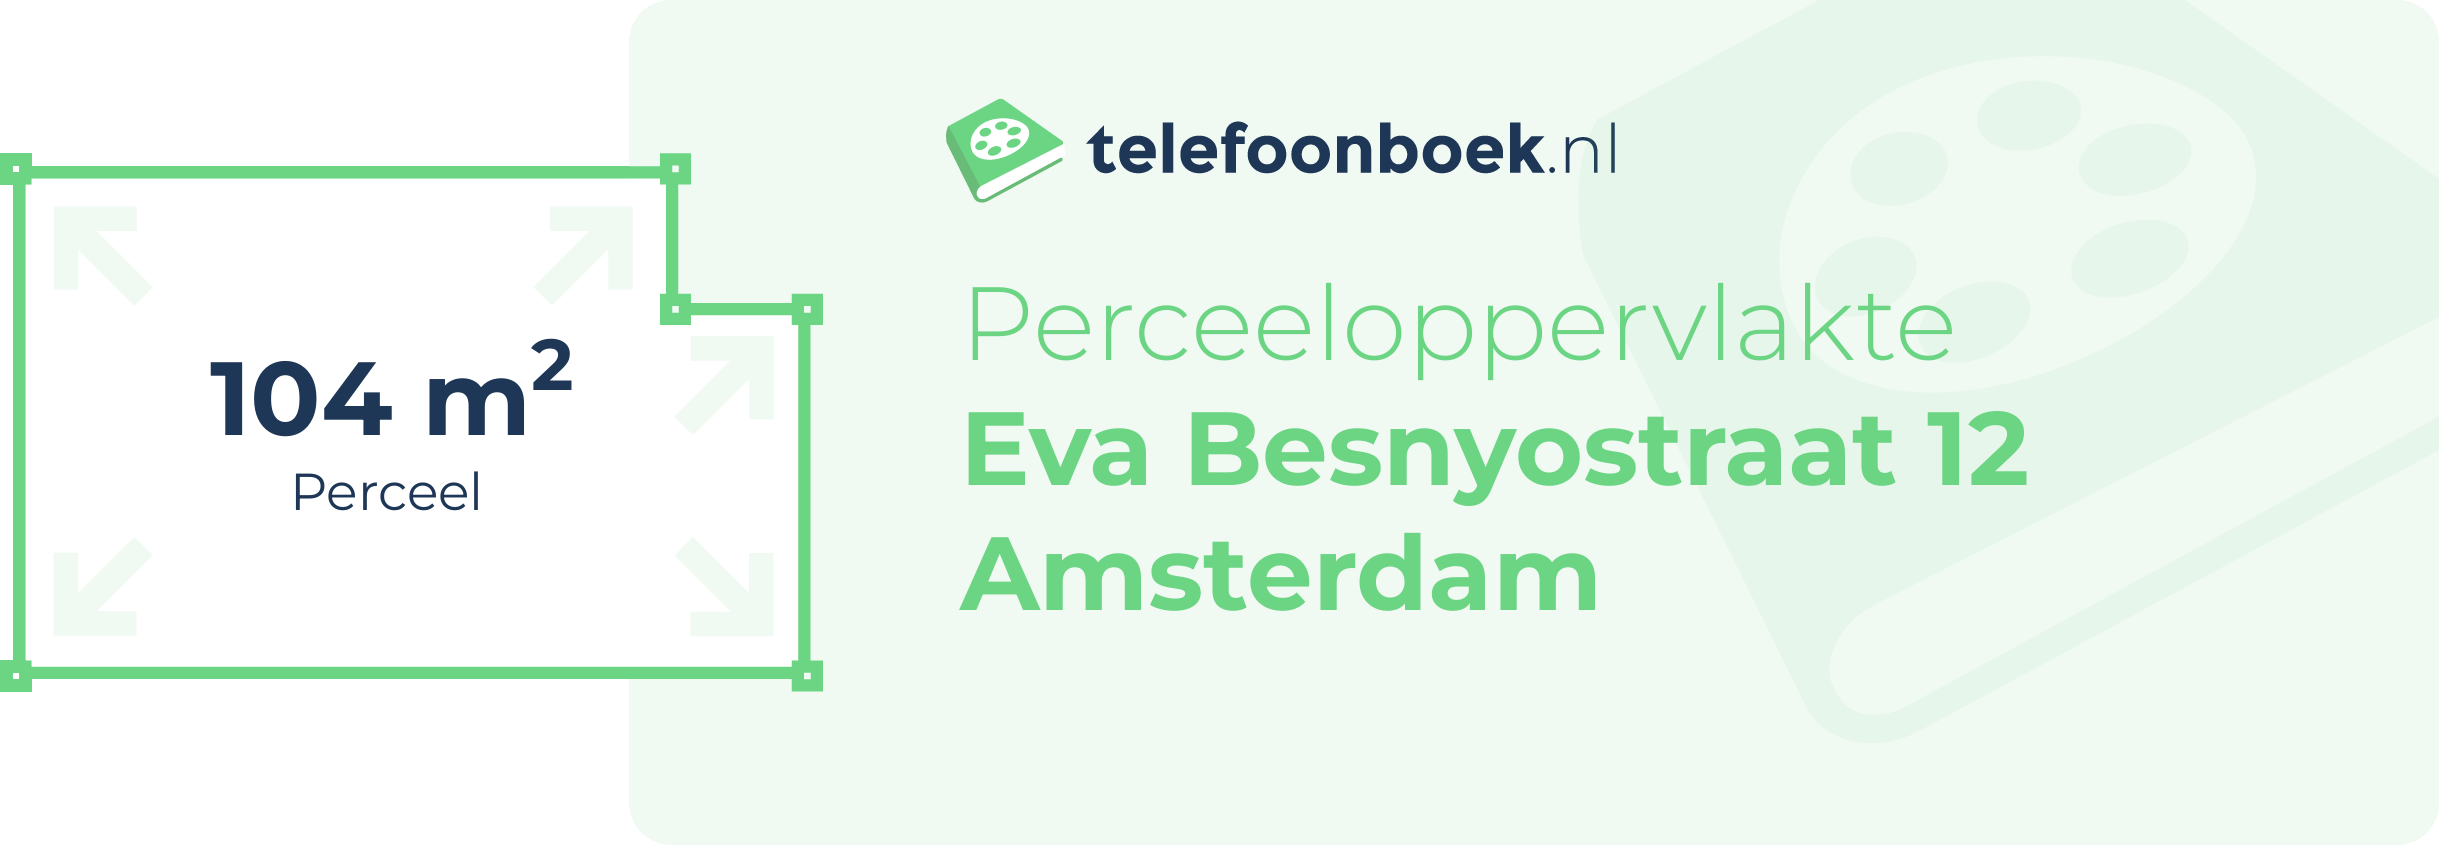 Perceeloppervlakte Eva Besnyostraat 12 Amsterdam